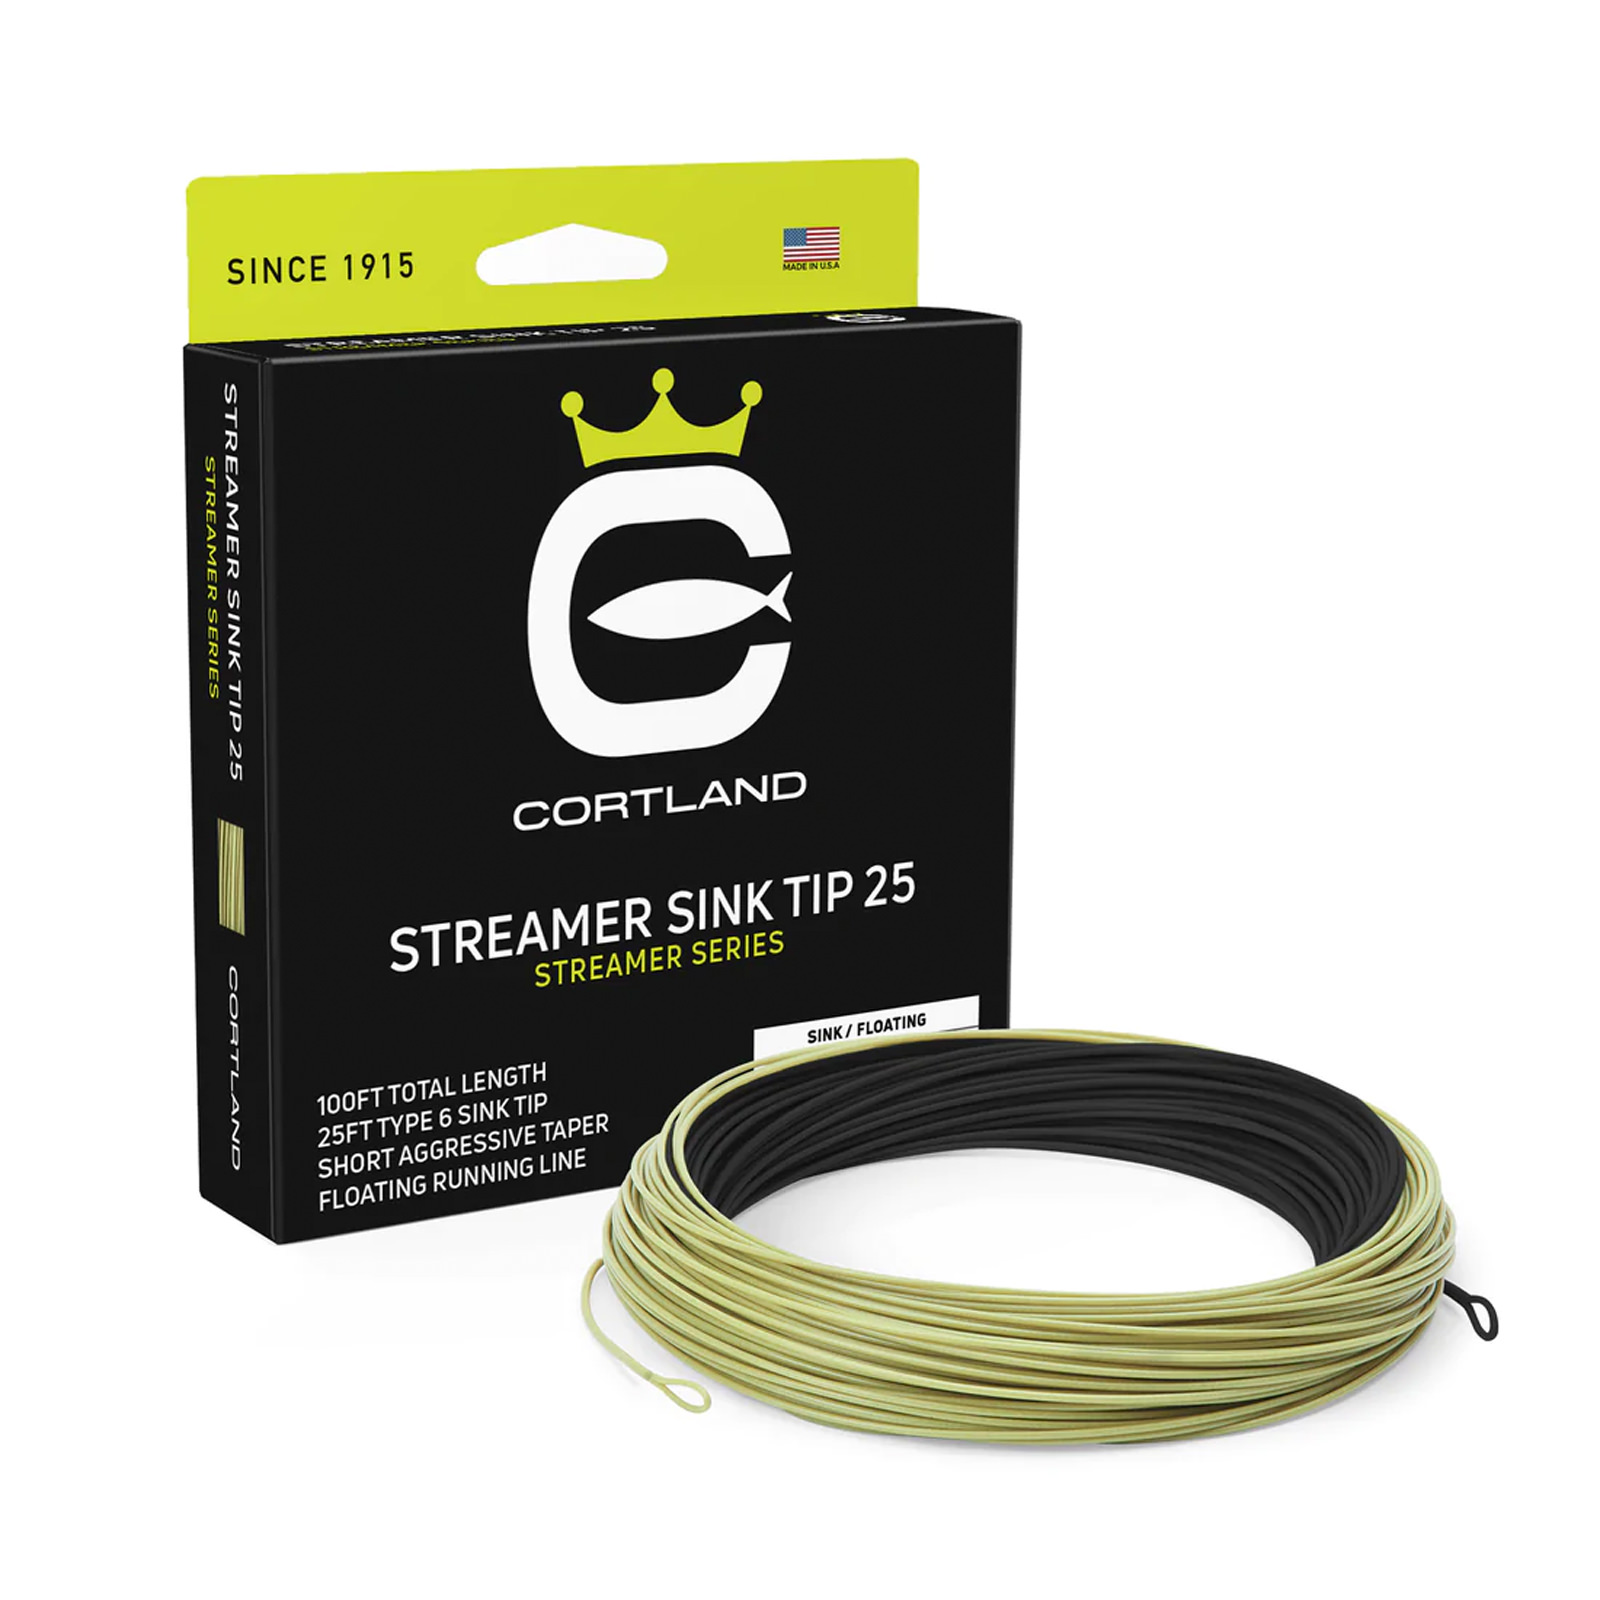 Cortland Streamer Sink Tip 25 Fly Line 6/7